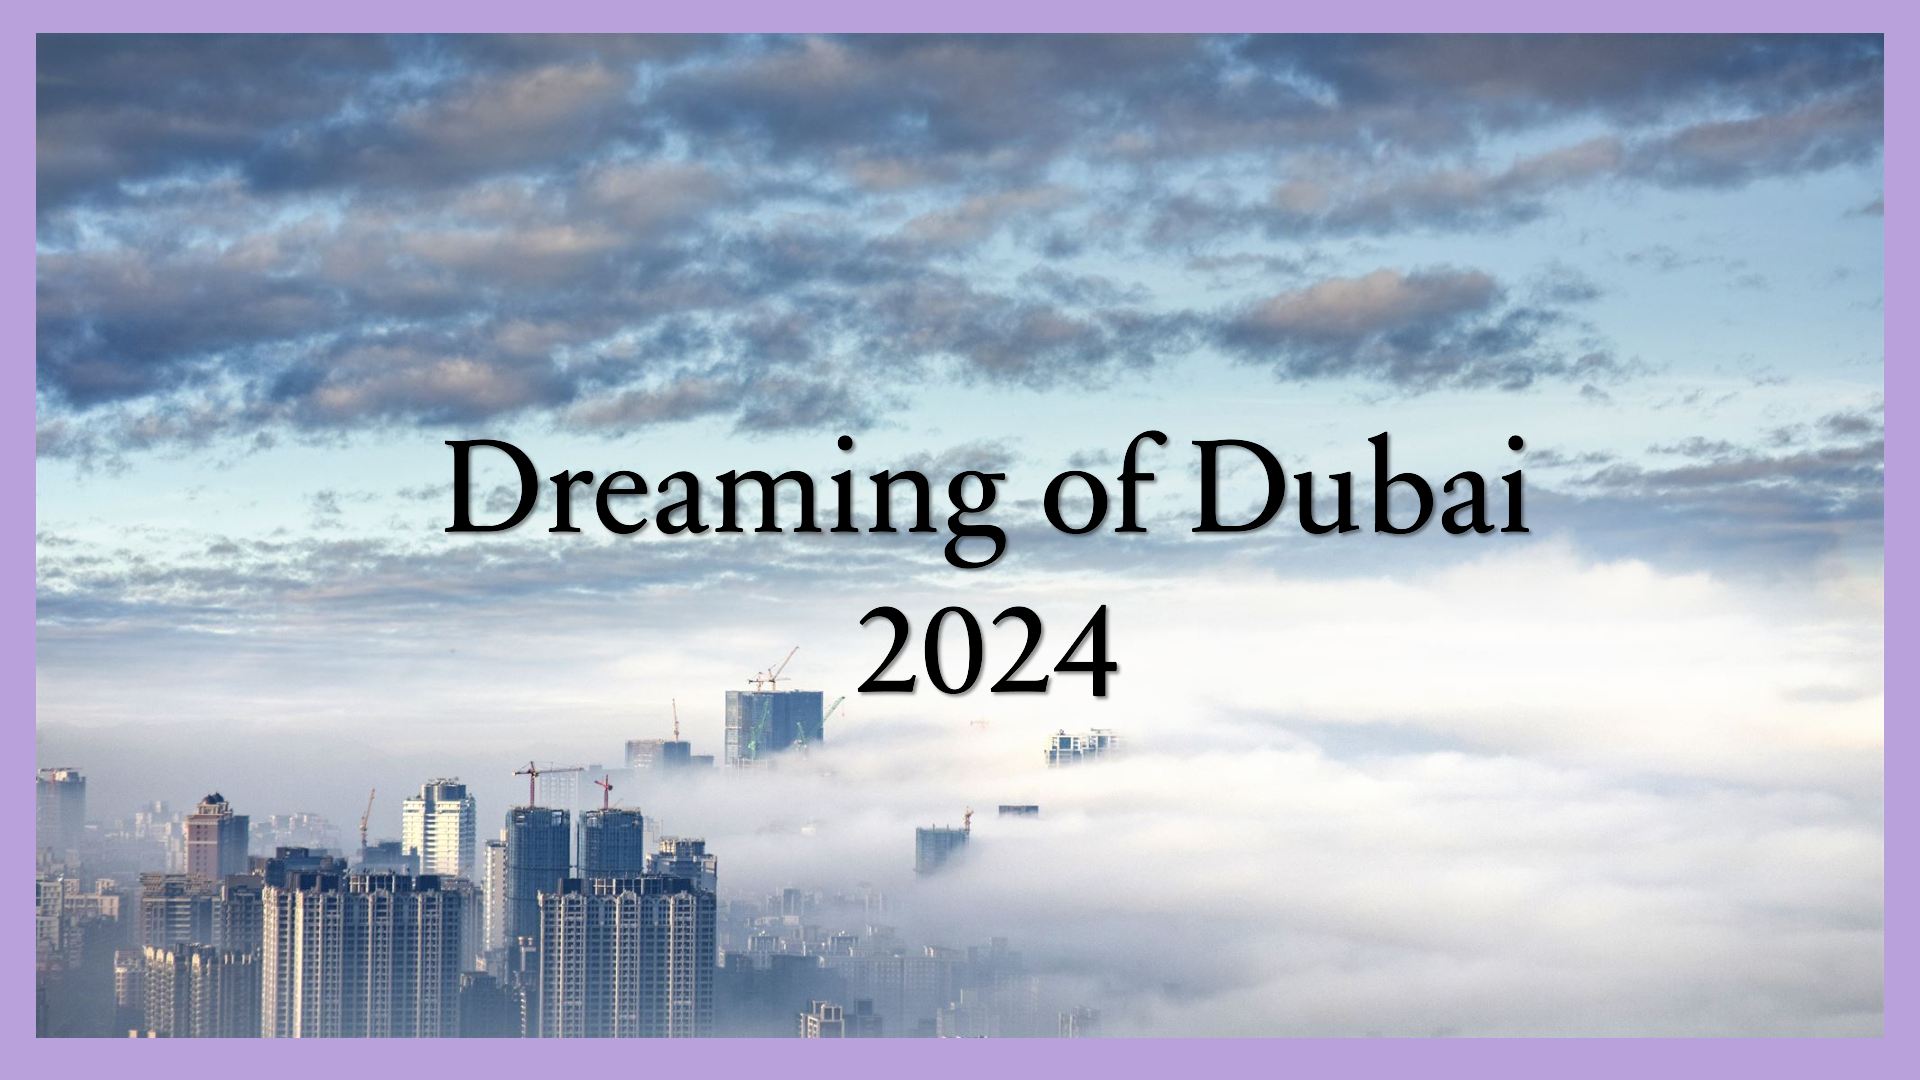 Dubai careers for Arabic and English speakers